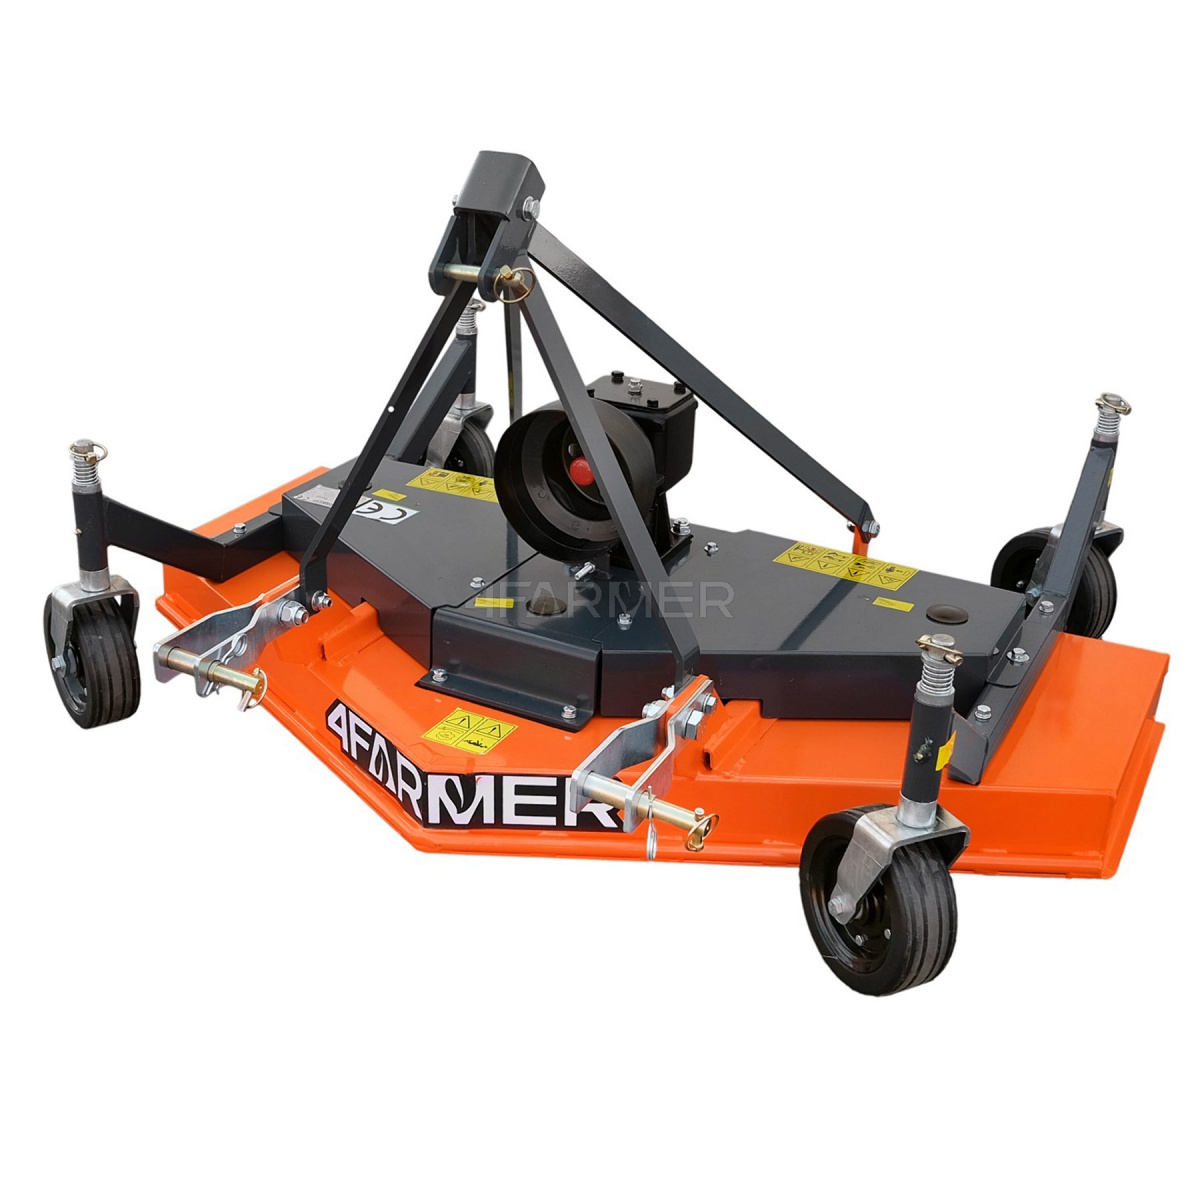 4farmer - Maintenance mower FMK 180 4FARMER - orange